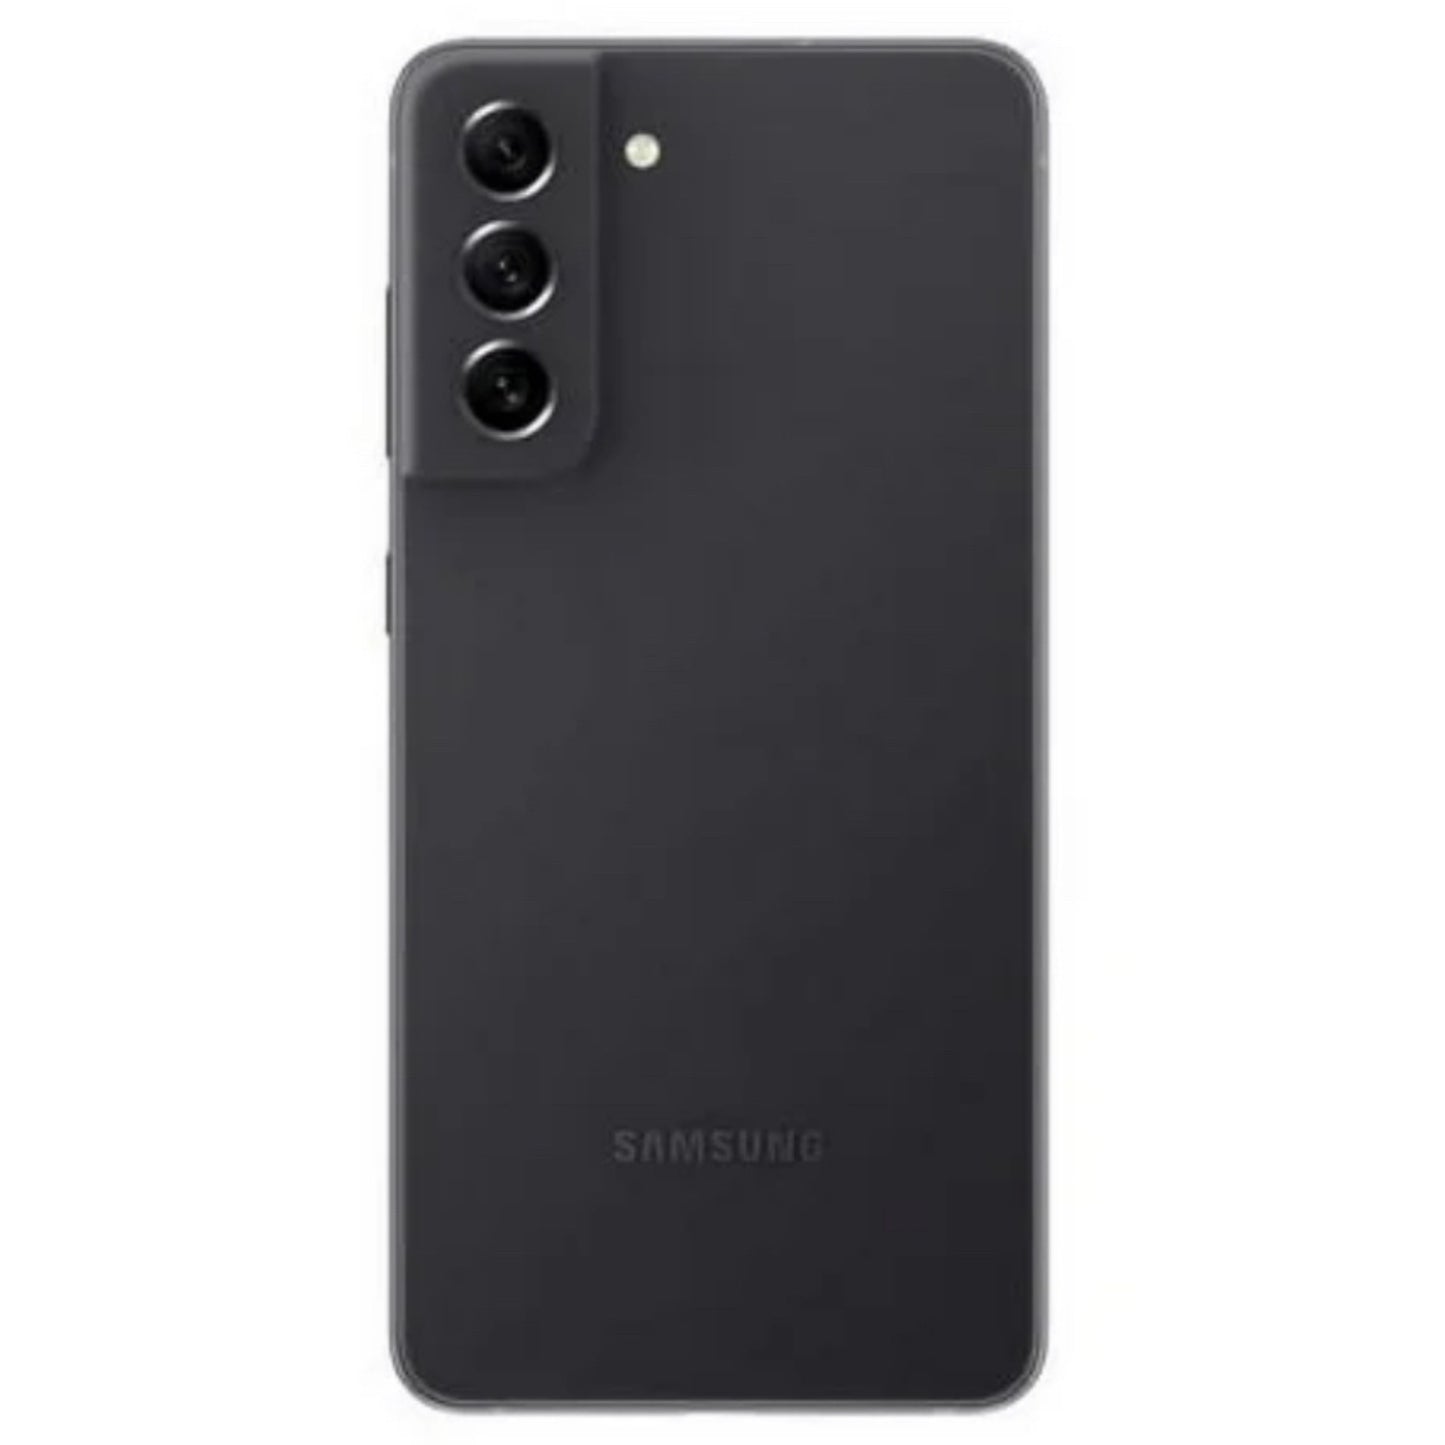 Samsung S21 FE 5G Black 128GB (Unlocked) Pre-Owned